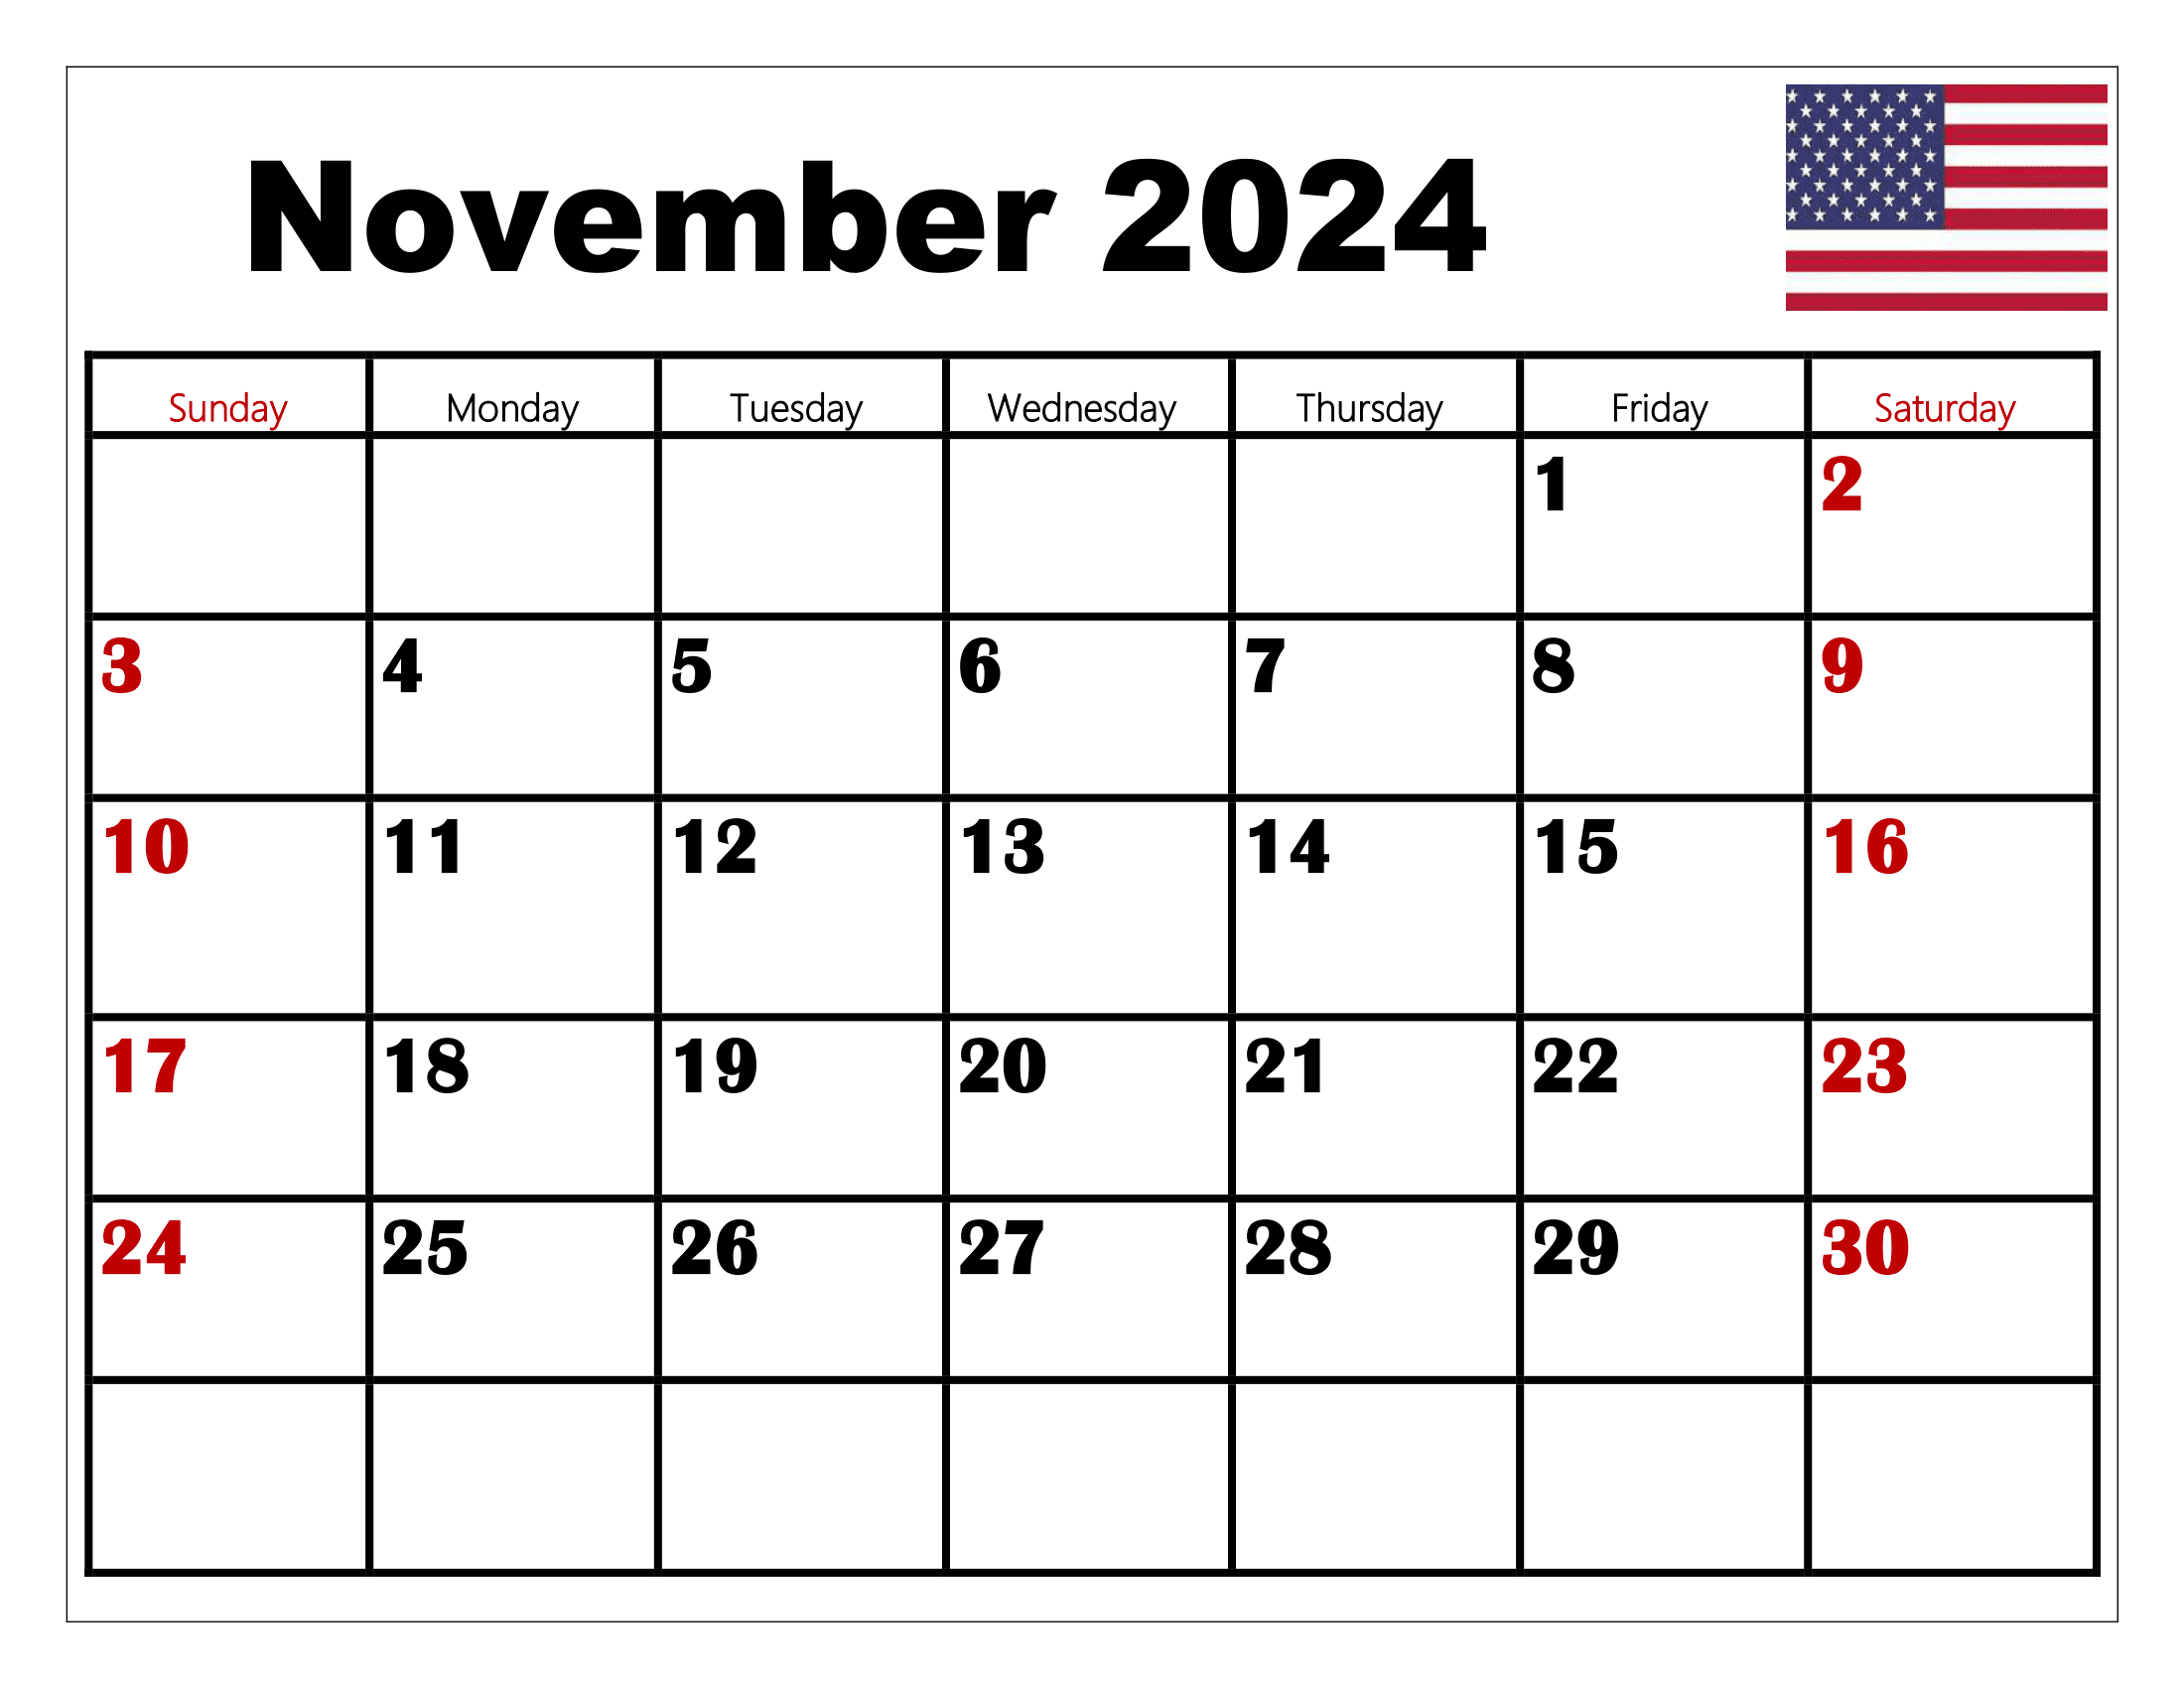 November 2024 Calendar Printable Pdf Template With Holidays for Printable November 2024 Calendar